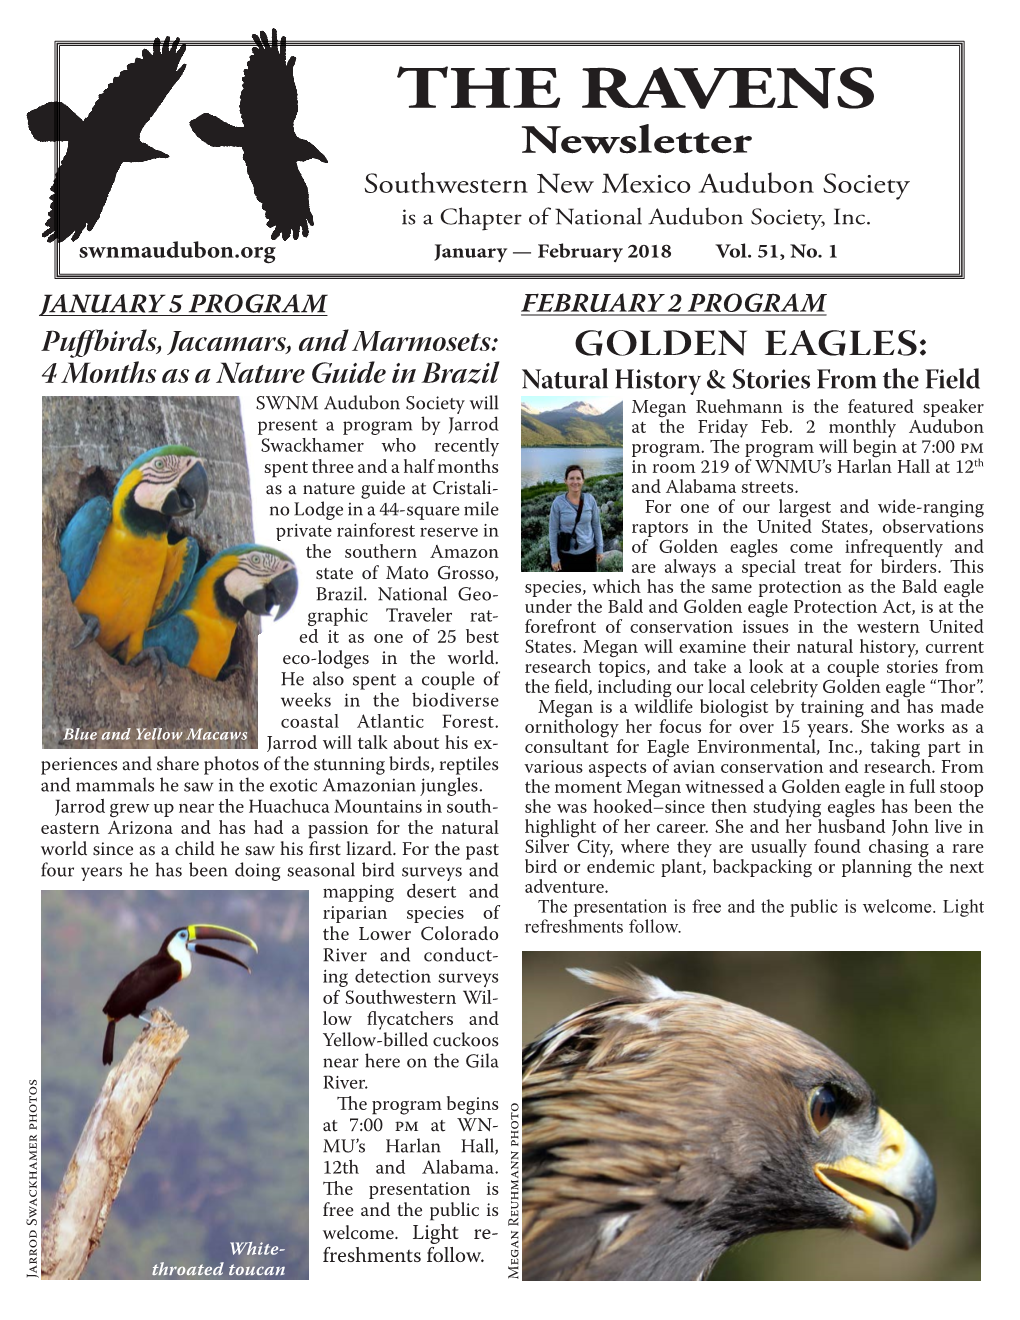 THE RAVENS Newsletter Southwestern New Mexico Audubon Society Is a Chapter of National Audubon Society, Inc